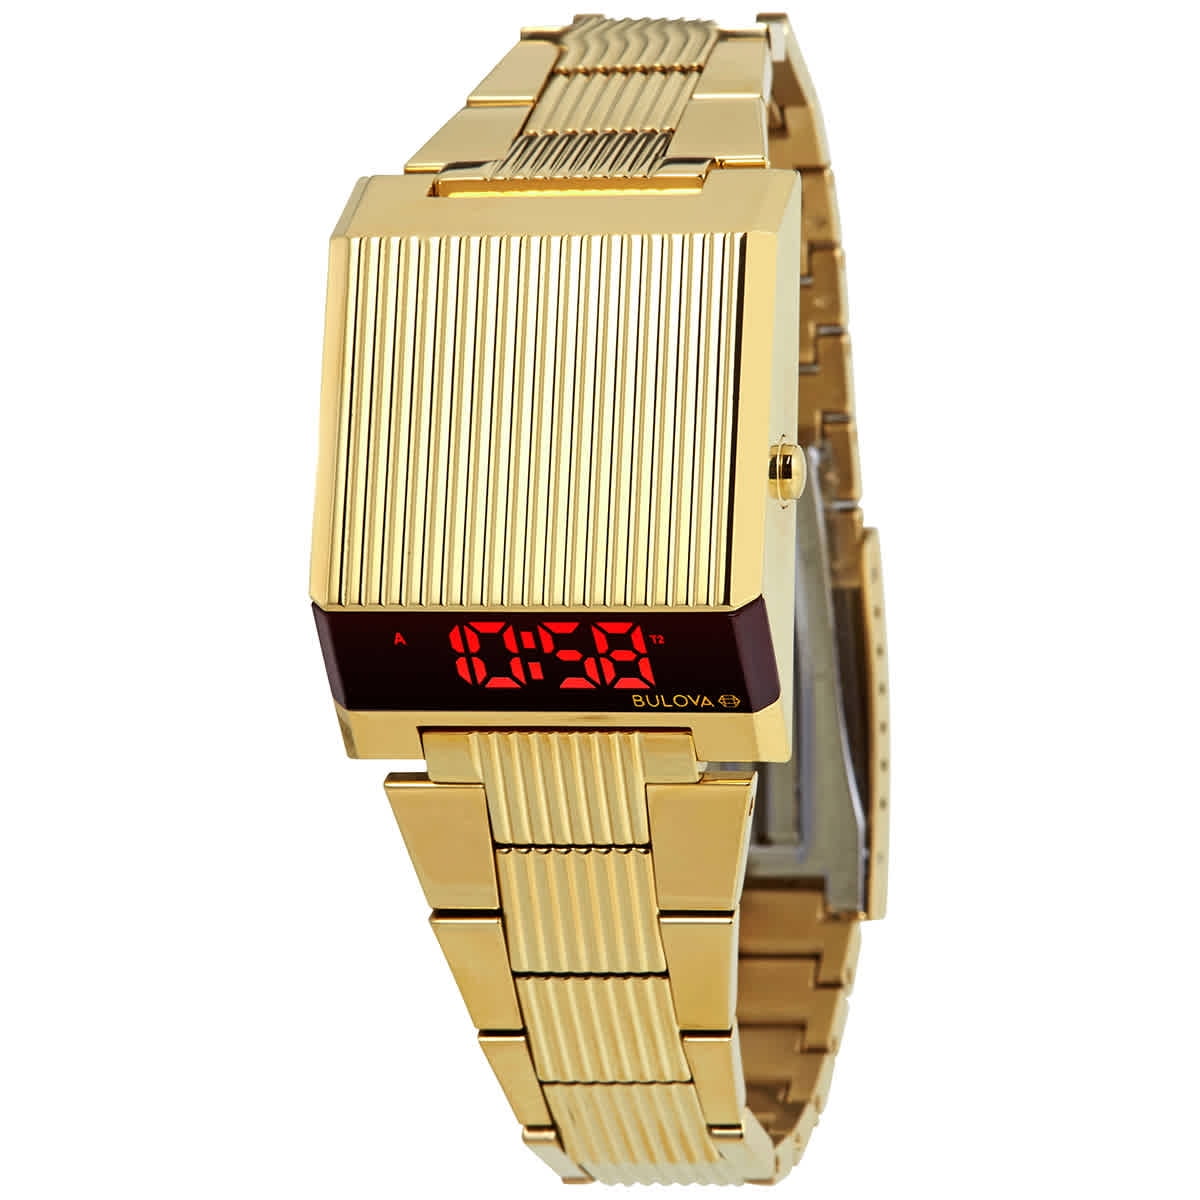 Bulova Quartz Digital Men's Watch 97C110 - Walmart.com